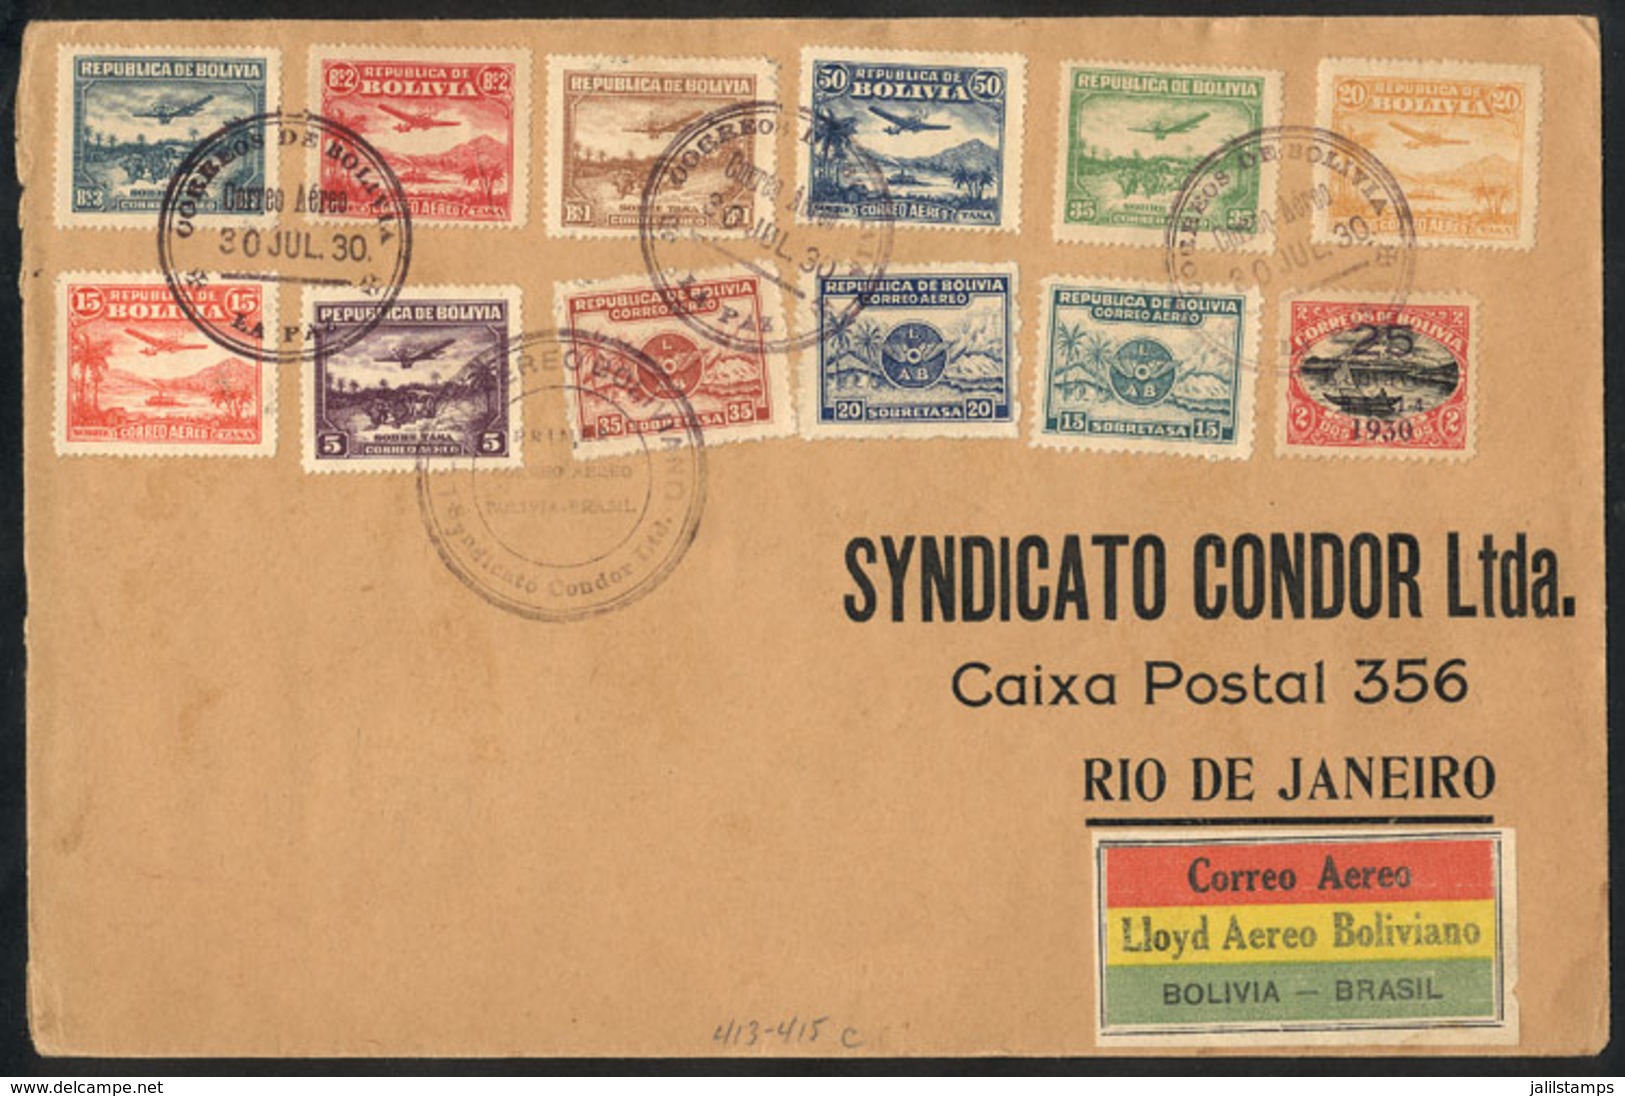 BOLIVIA: 30/JUL/1930 First Airmail Bolivia-Brazil Via Syndicato Condor, Good Cover With Very Nice Multicolored Postage,  - Bolivia